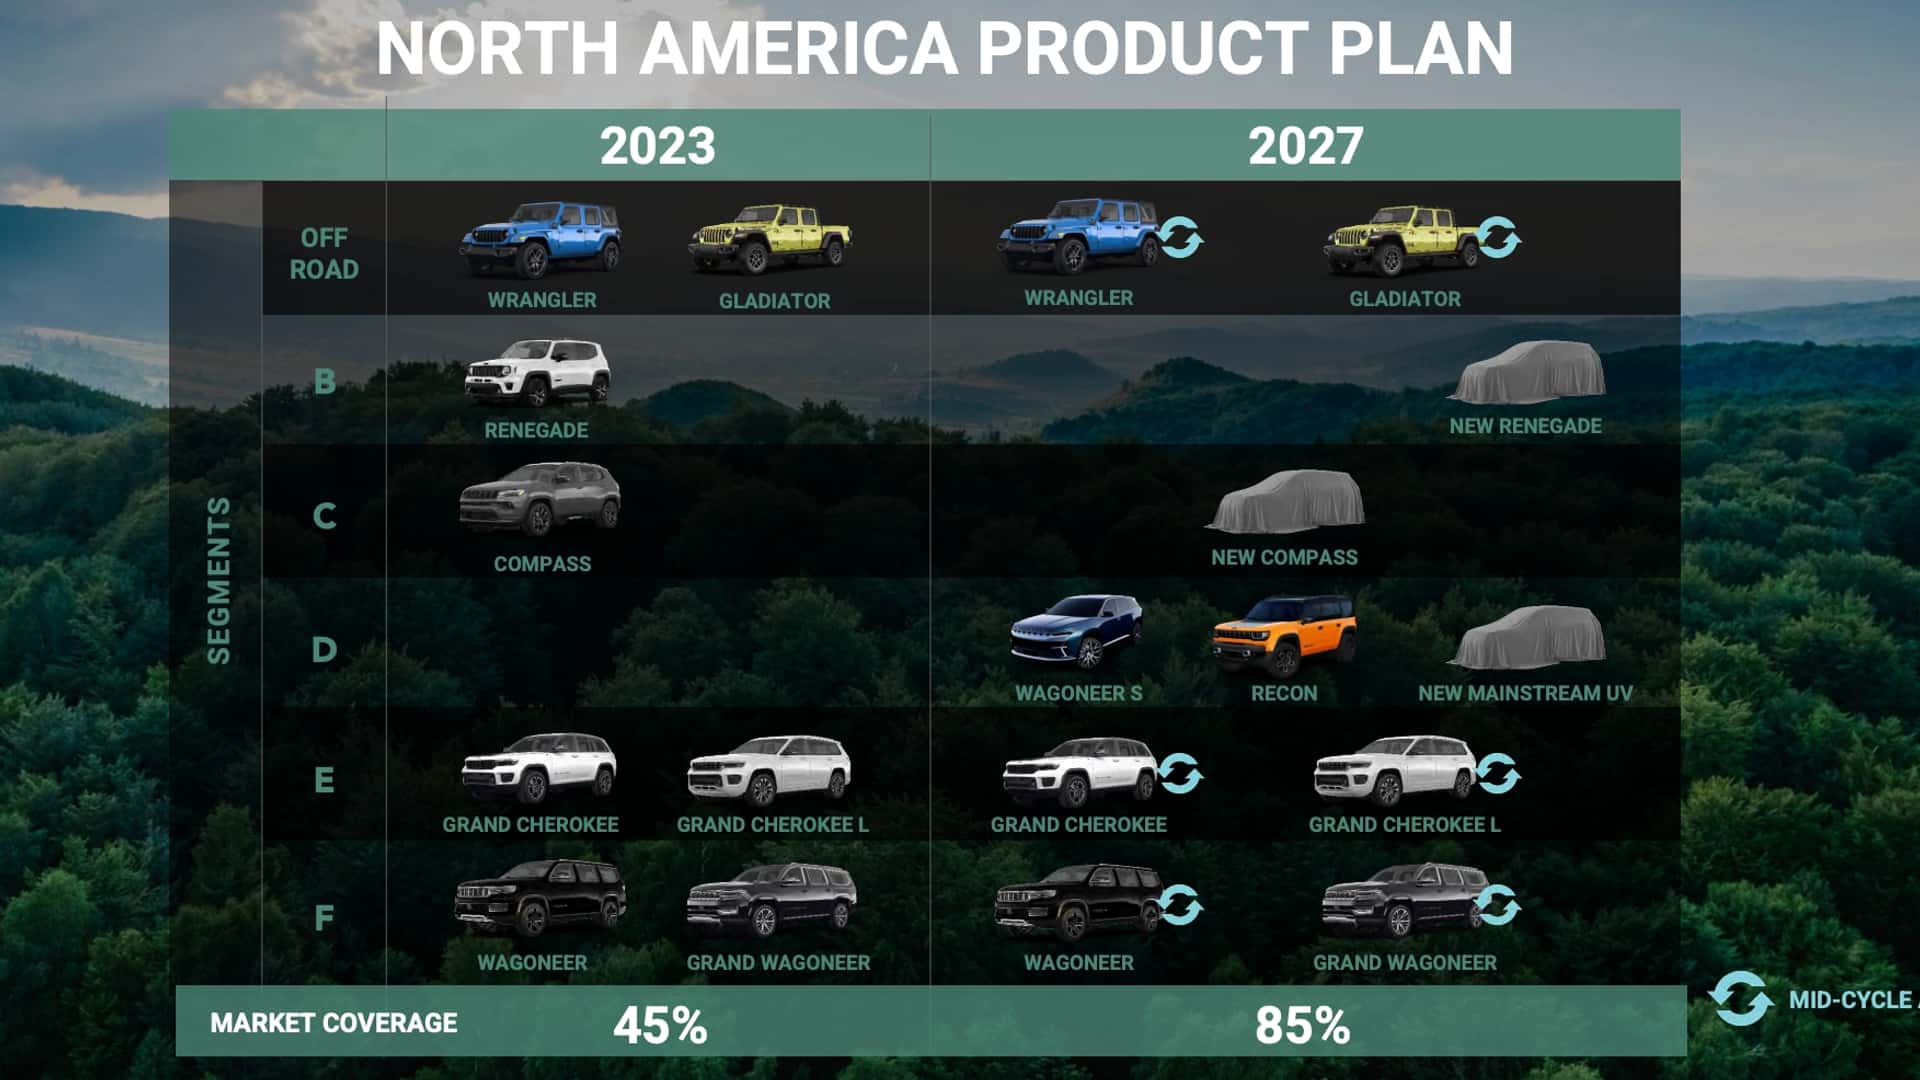 Jeep Product Roadmap 2027